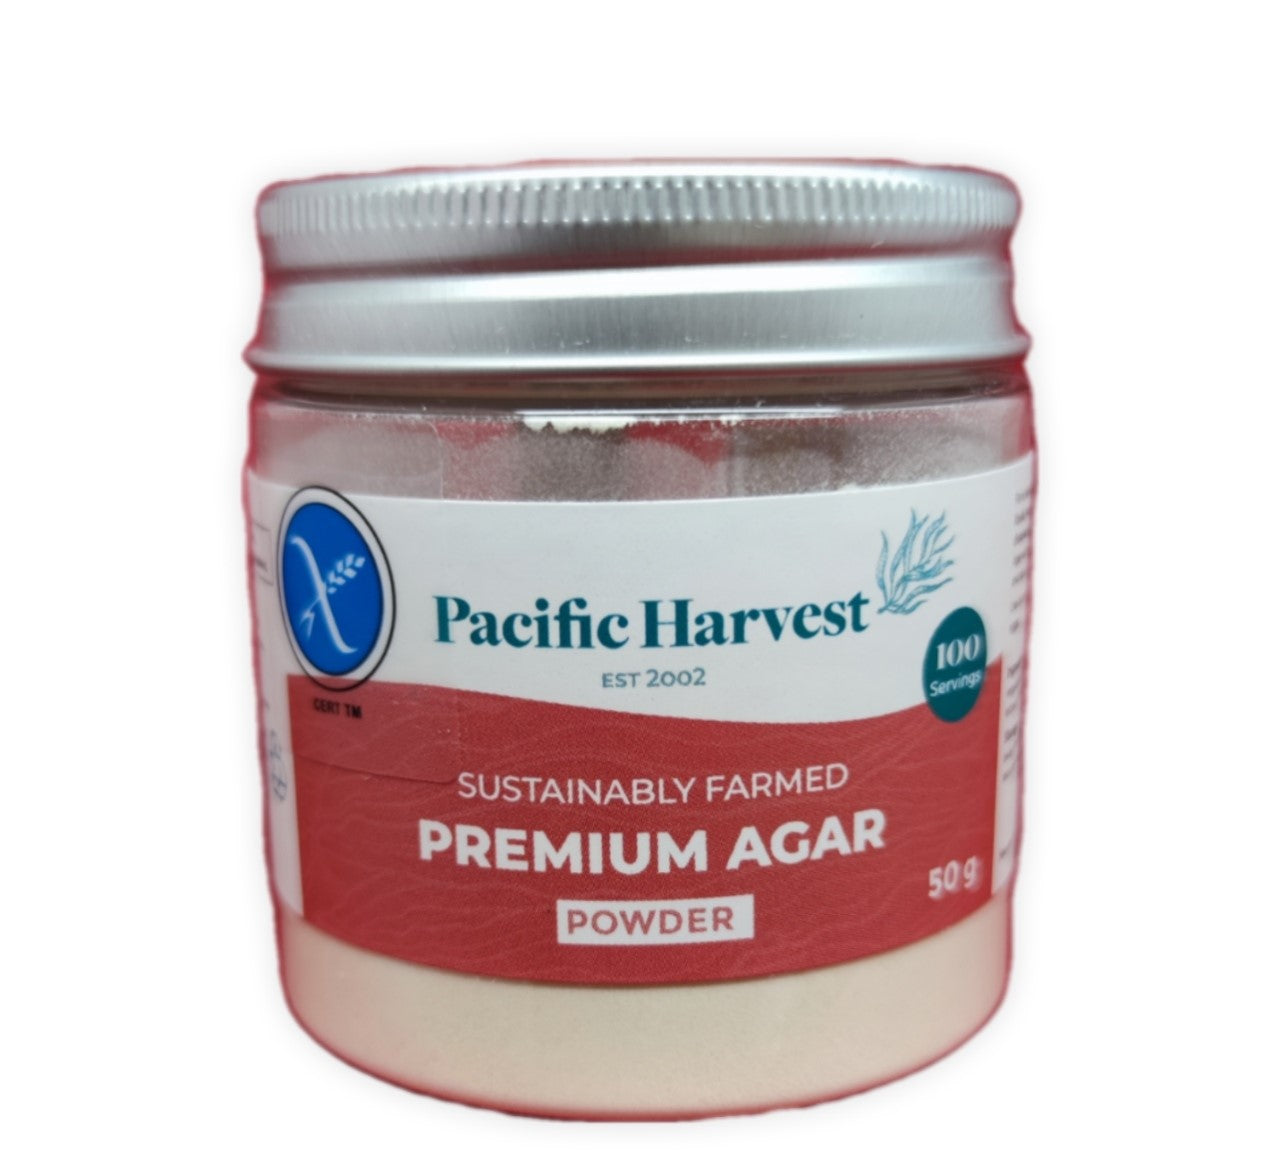 Pacific Harvest - Sustainably Farmed Premium Agar - [50g]